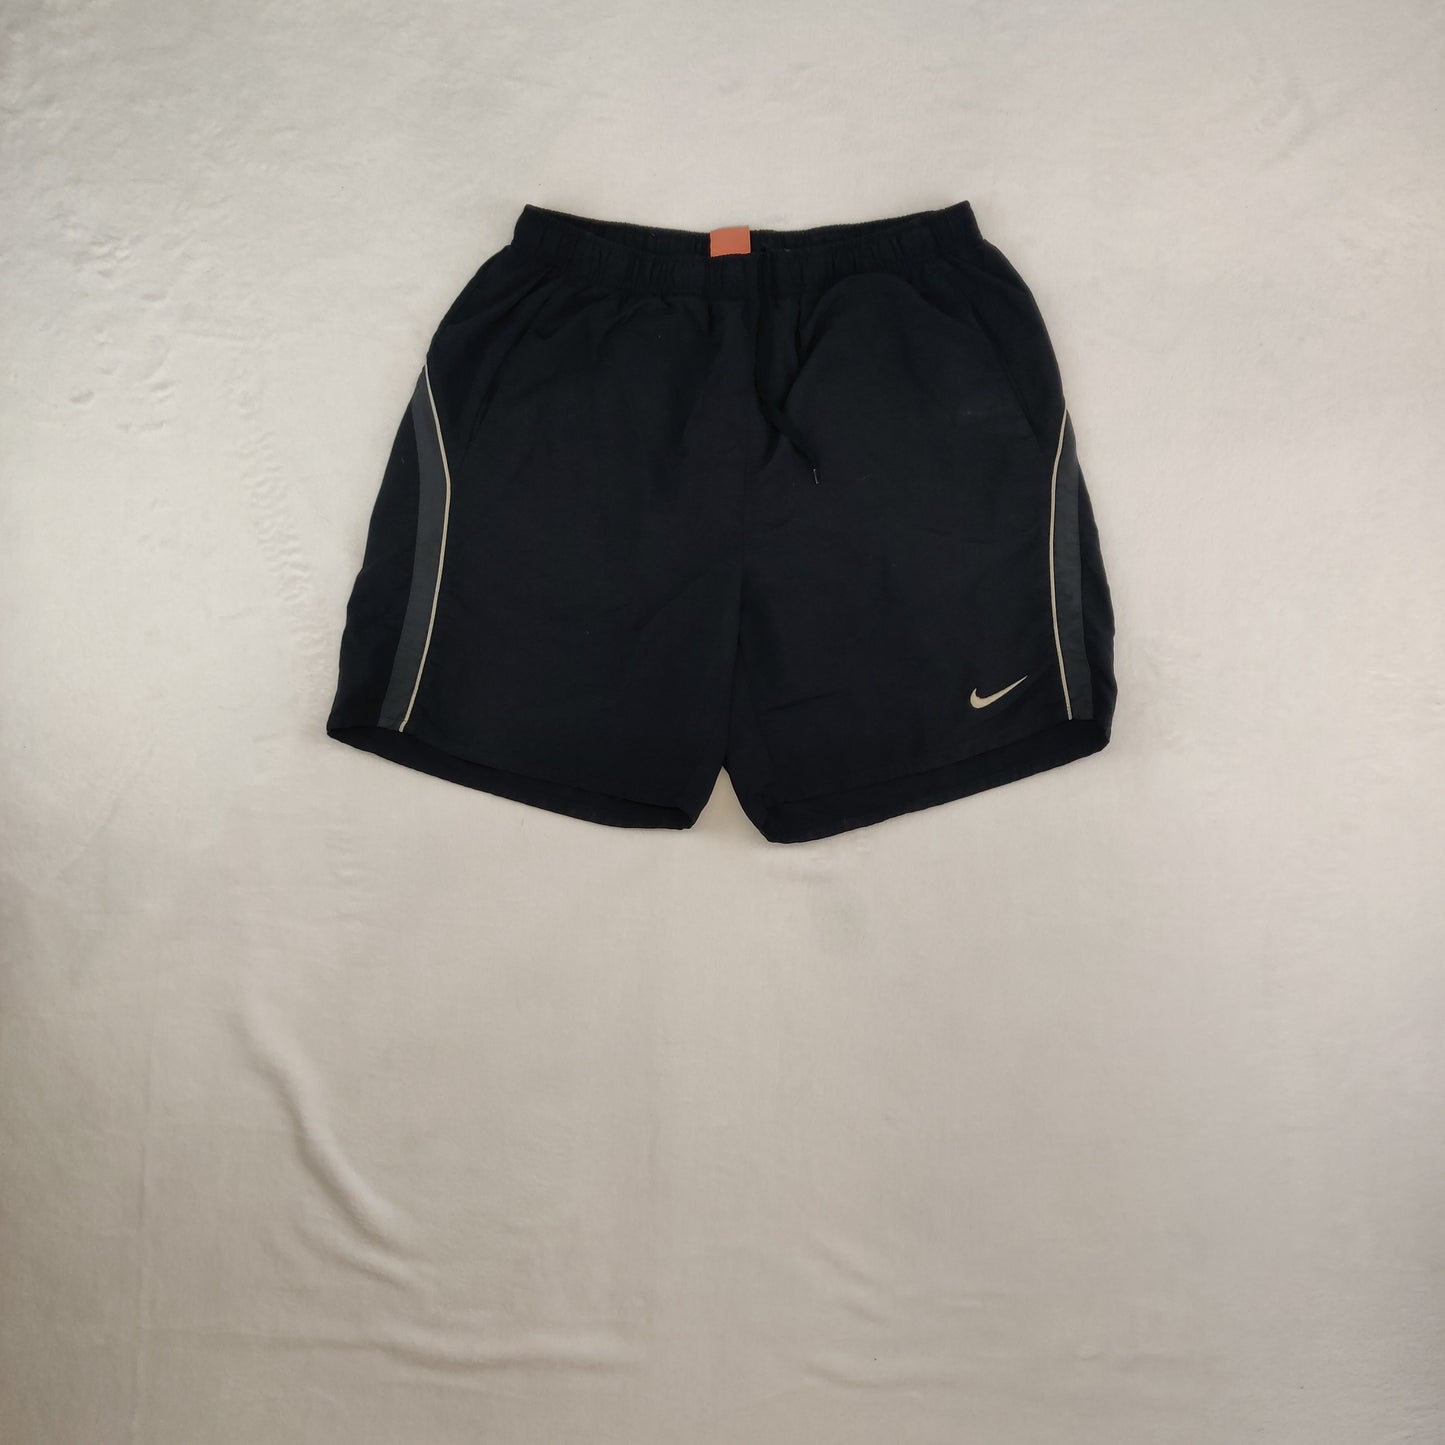 Nike The Athletic Dept. Vintage Black Grey Athletic Shorts Men Size XL